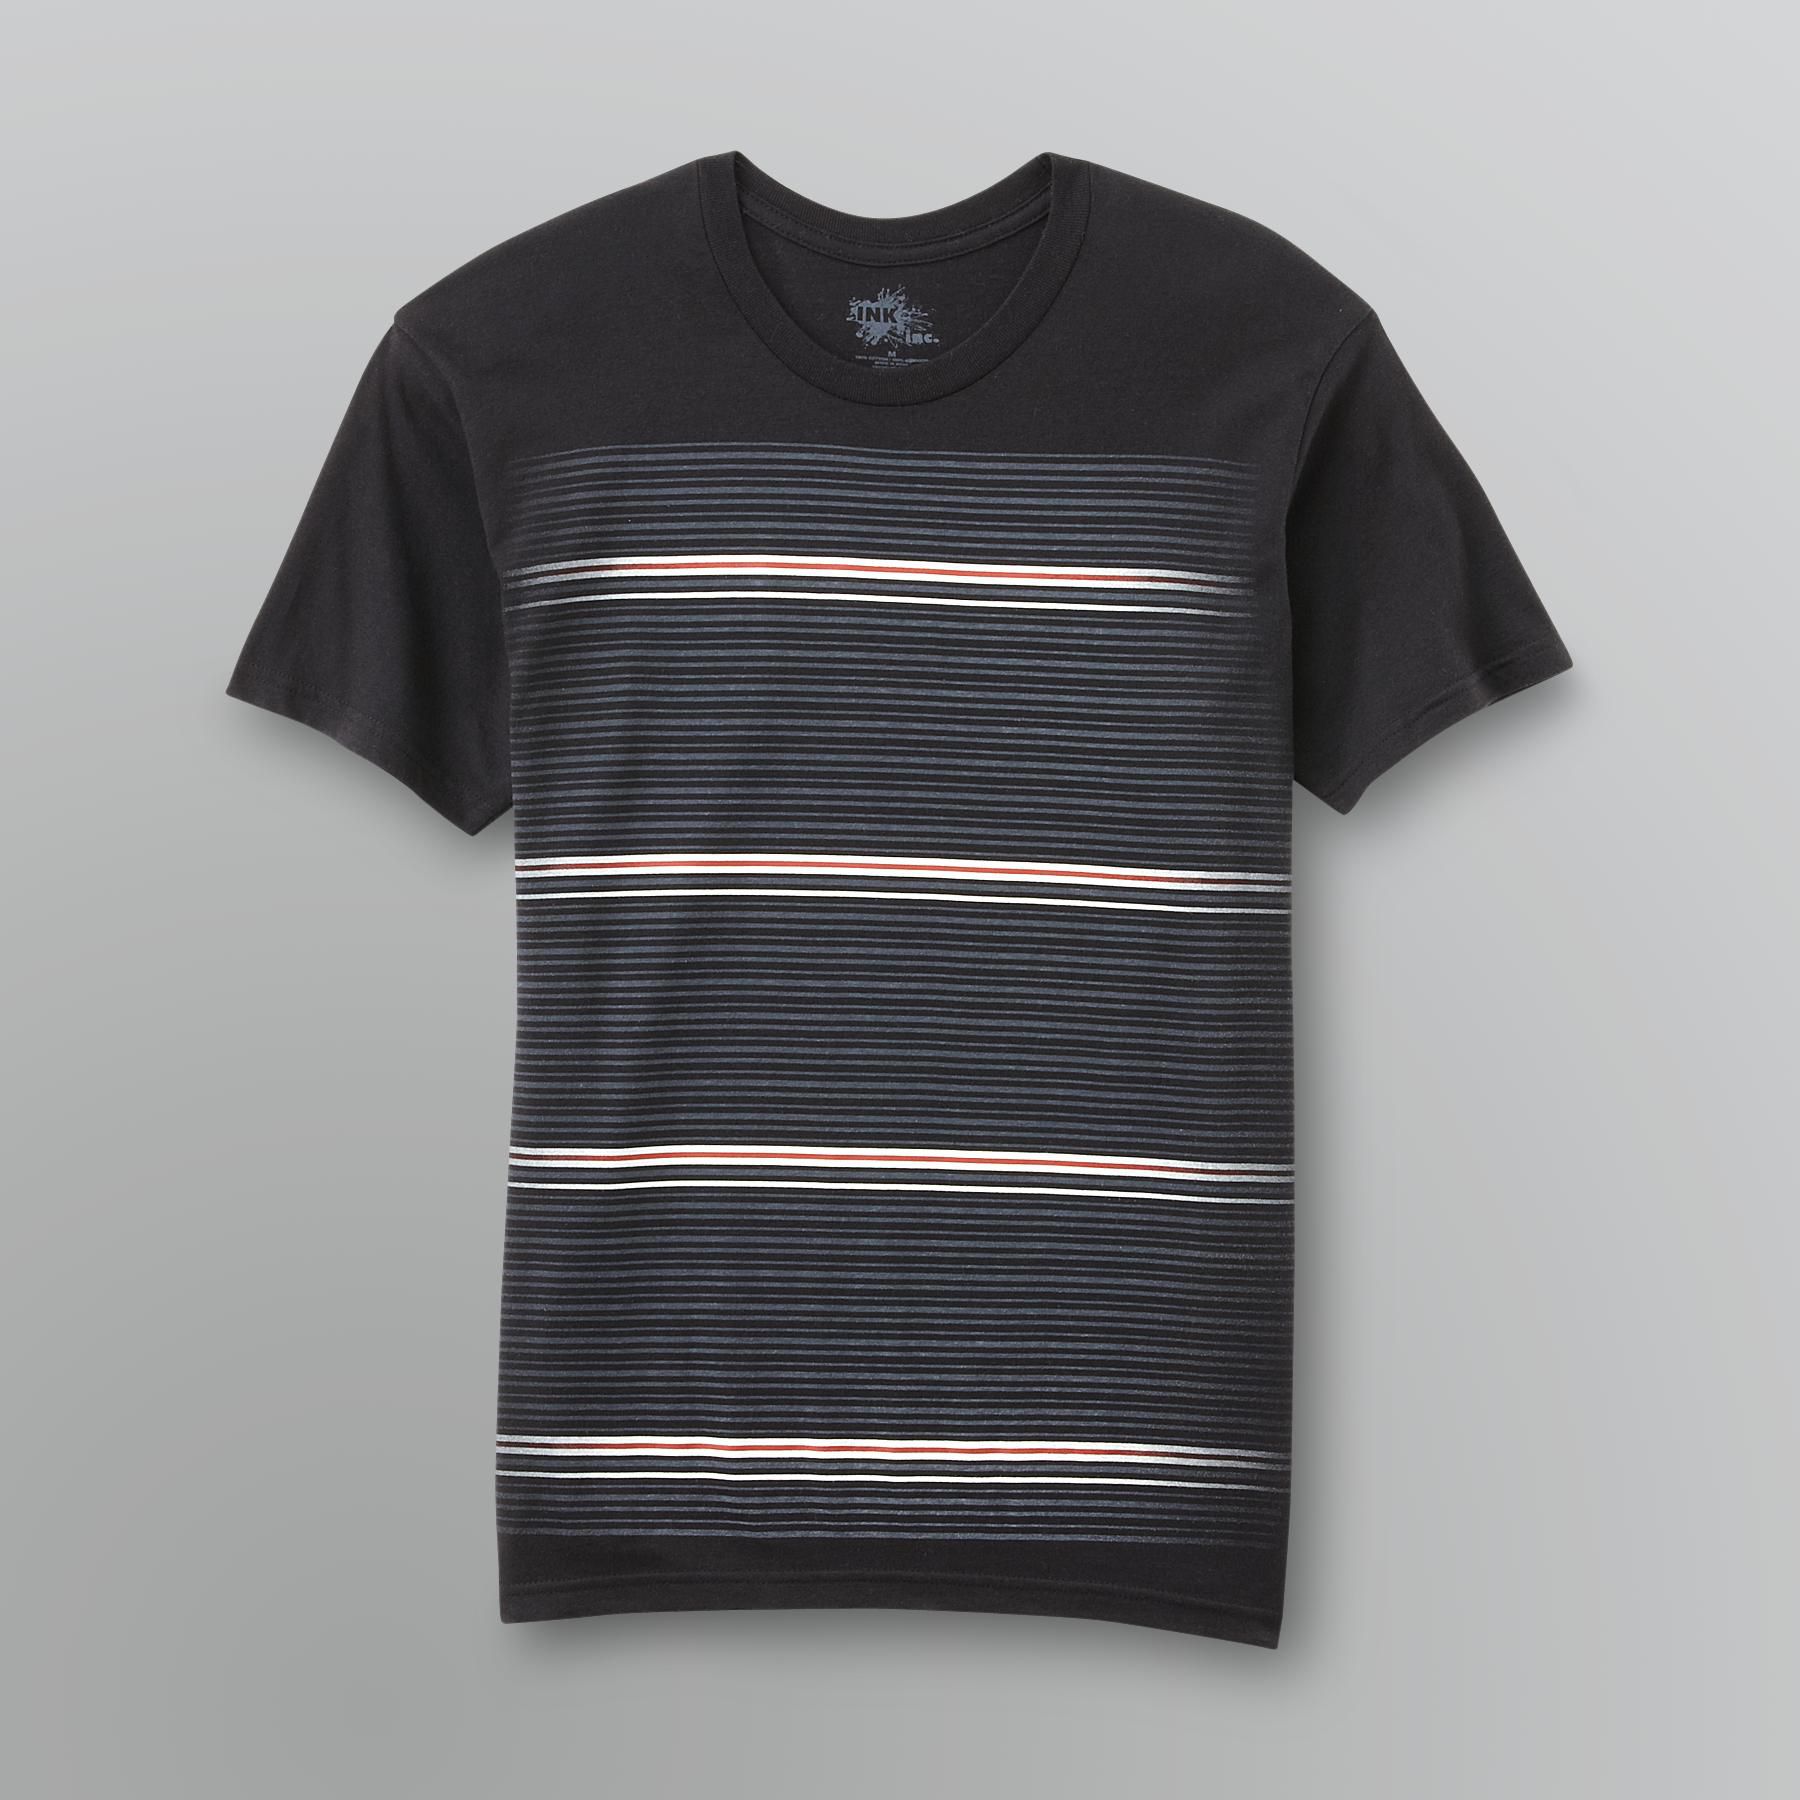 Ink Inc. Young Men's Varied Stripe T-Shirt